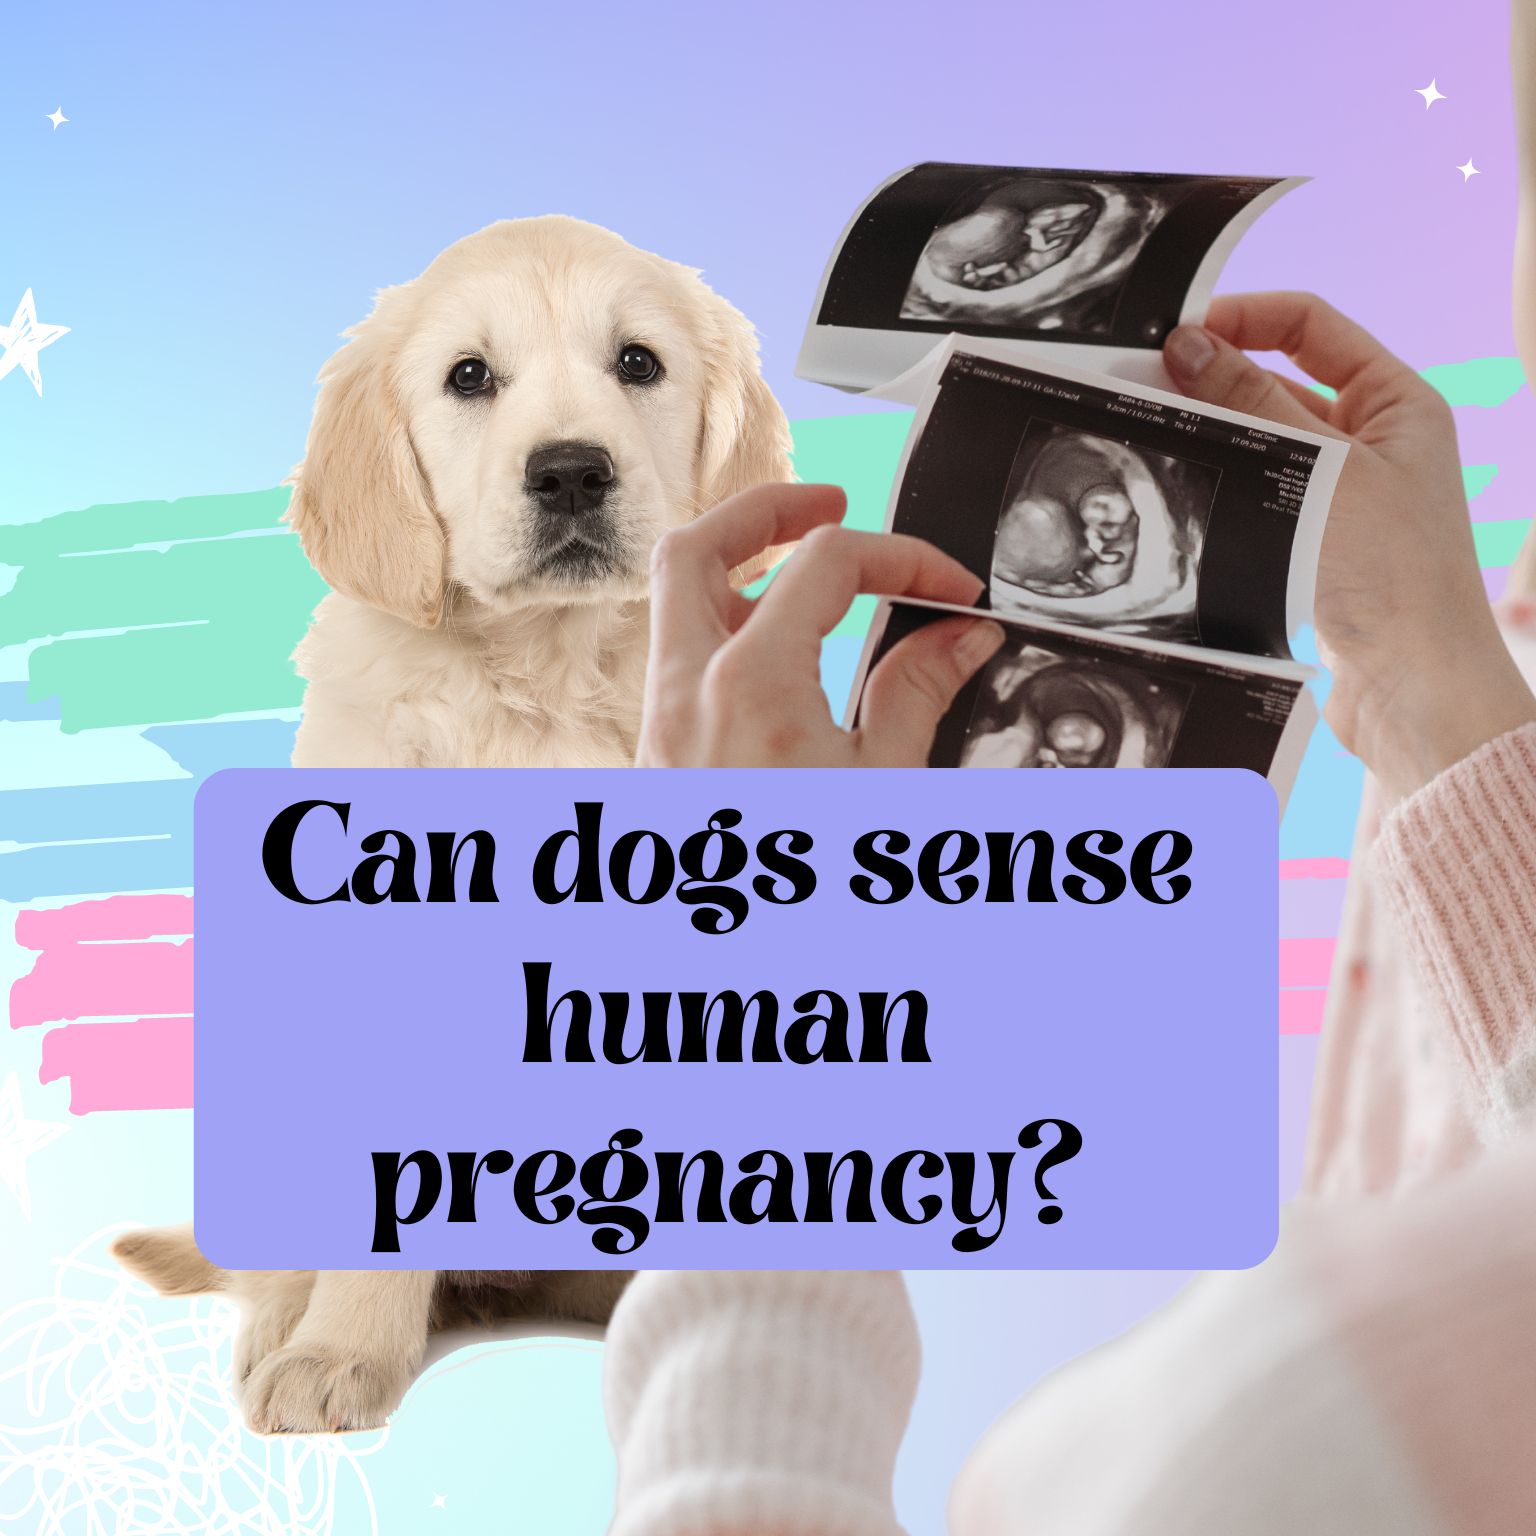 Can dogs sense human pregnancy. Golden retriever by woman holding pregnancy scan photos